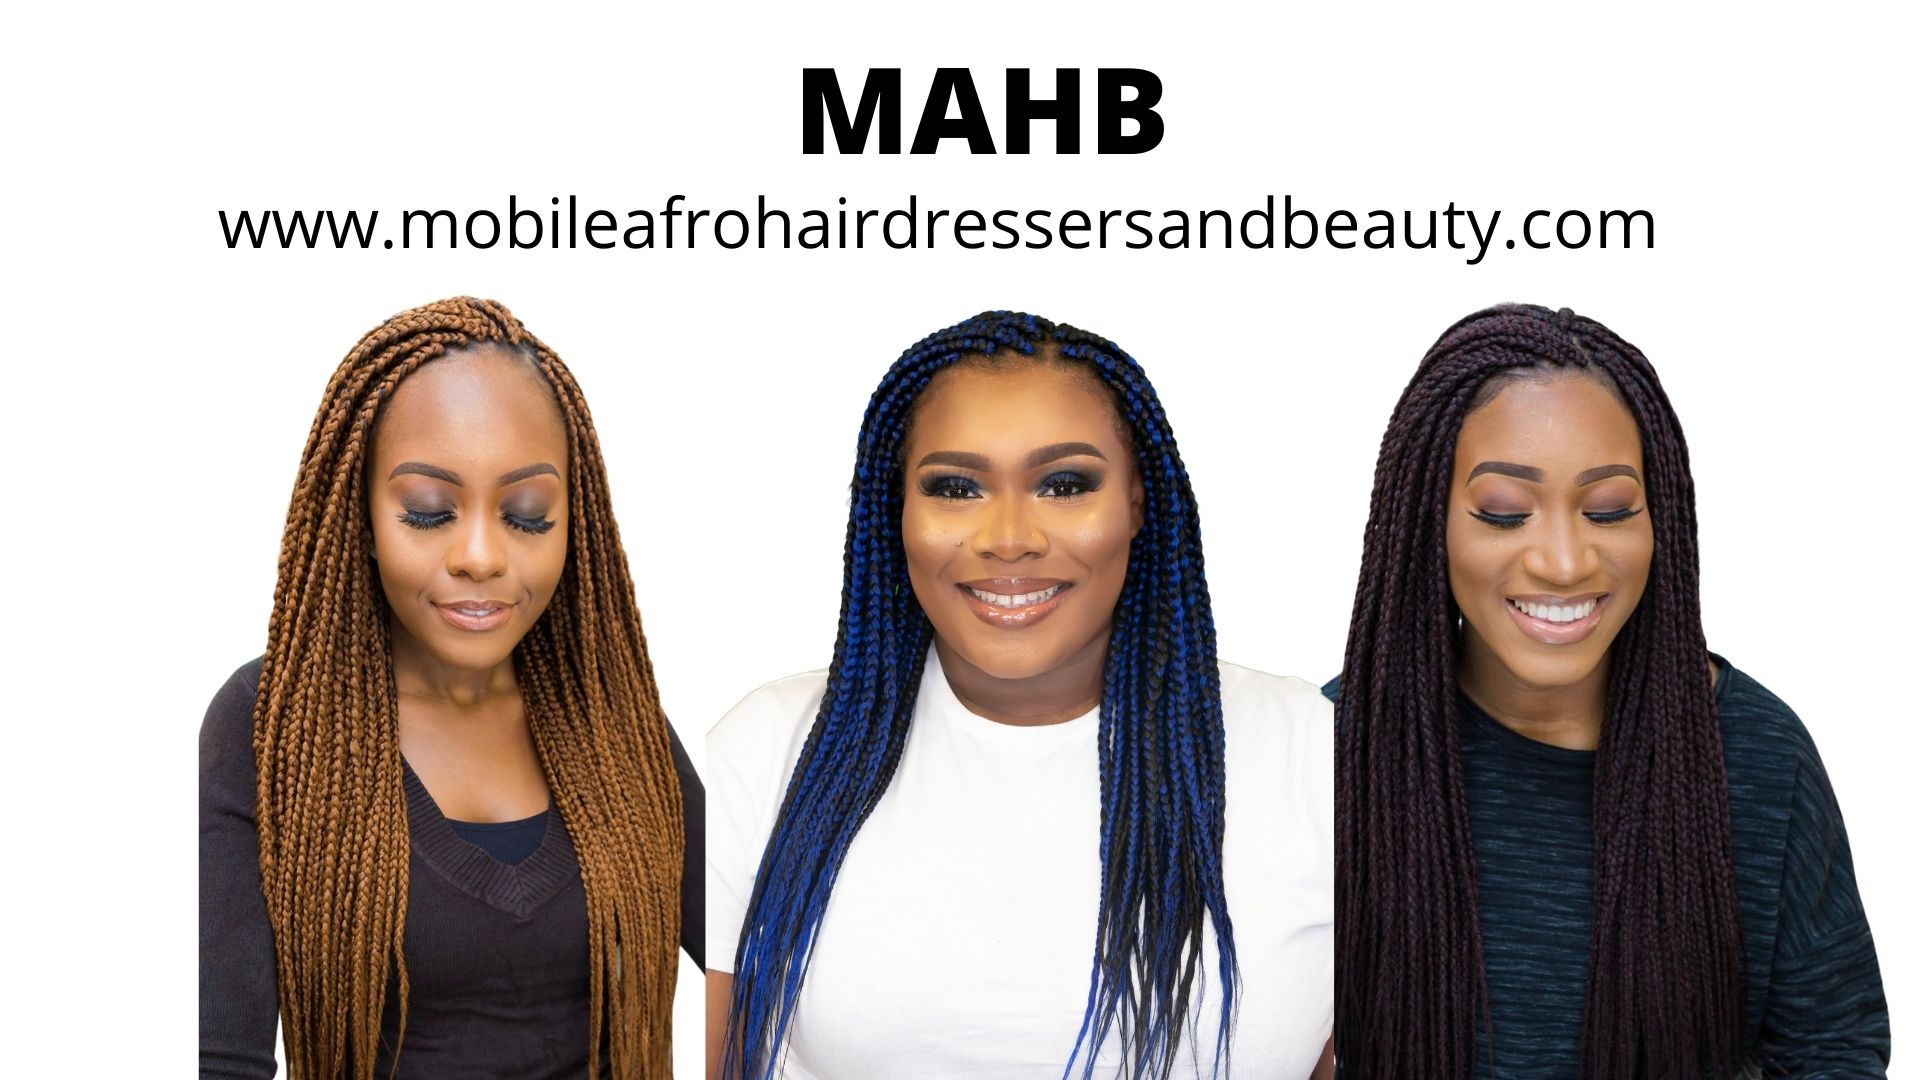 Home Service Hair Braiding, Box braiding, braiding, Twist, Cornrows, Mobile Afro Hairdressers UK